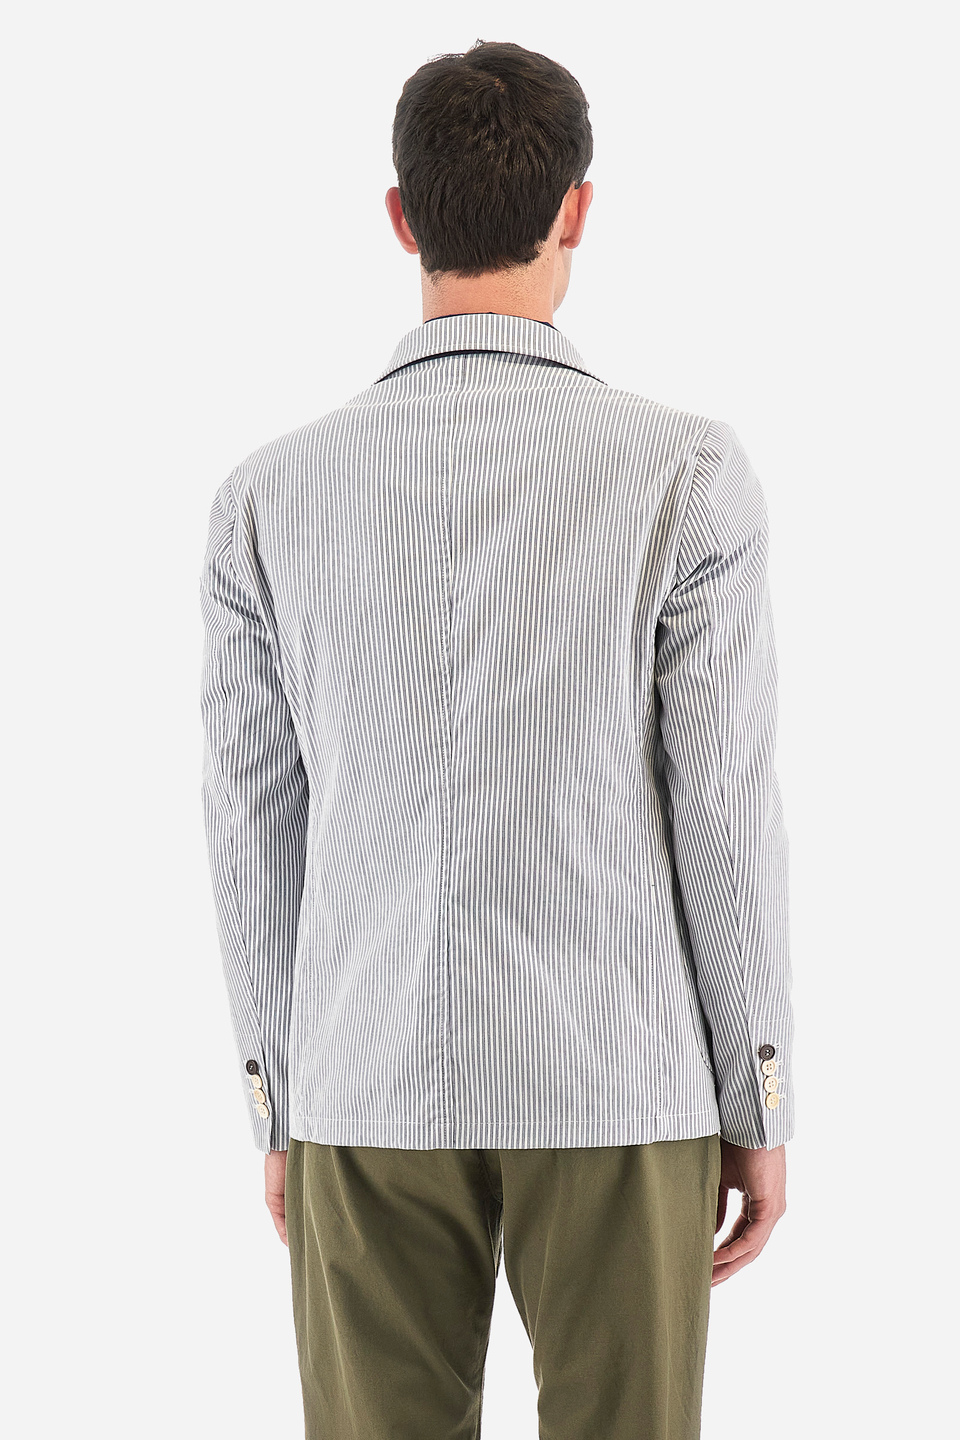 Men's jacket in regular fit cotton blend fabric - Von | La Martina - Official Online Shop